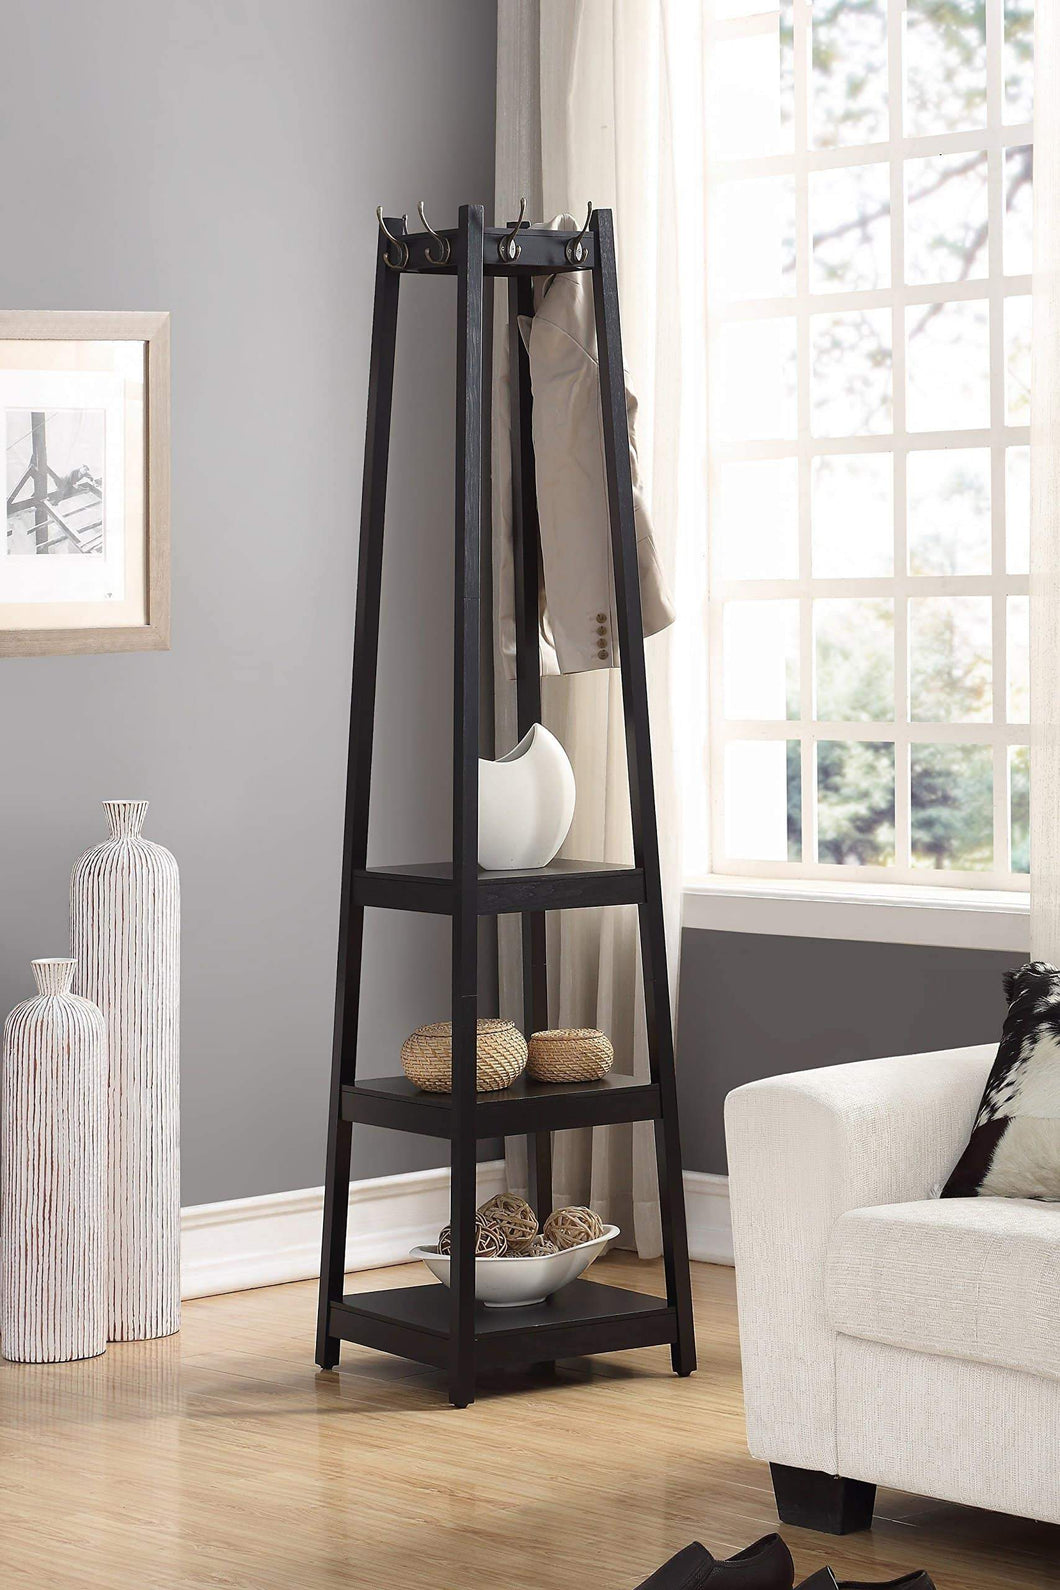 Try roundhill furniture vassen coat rack with 3 tier storage shelves black finish